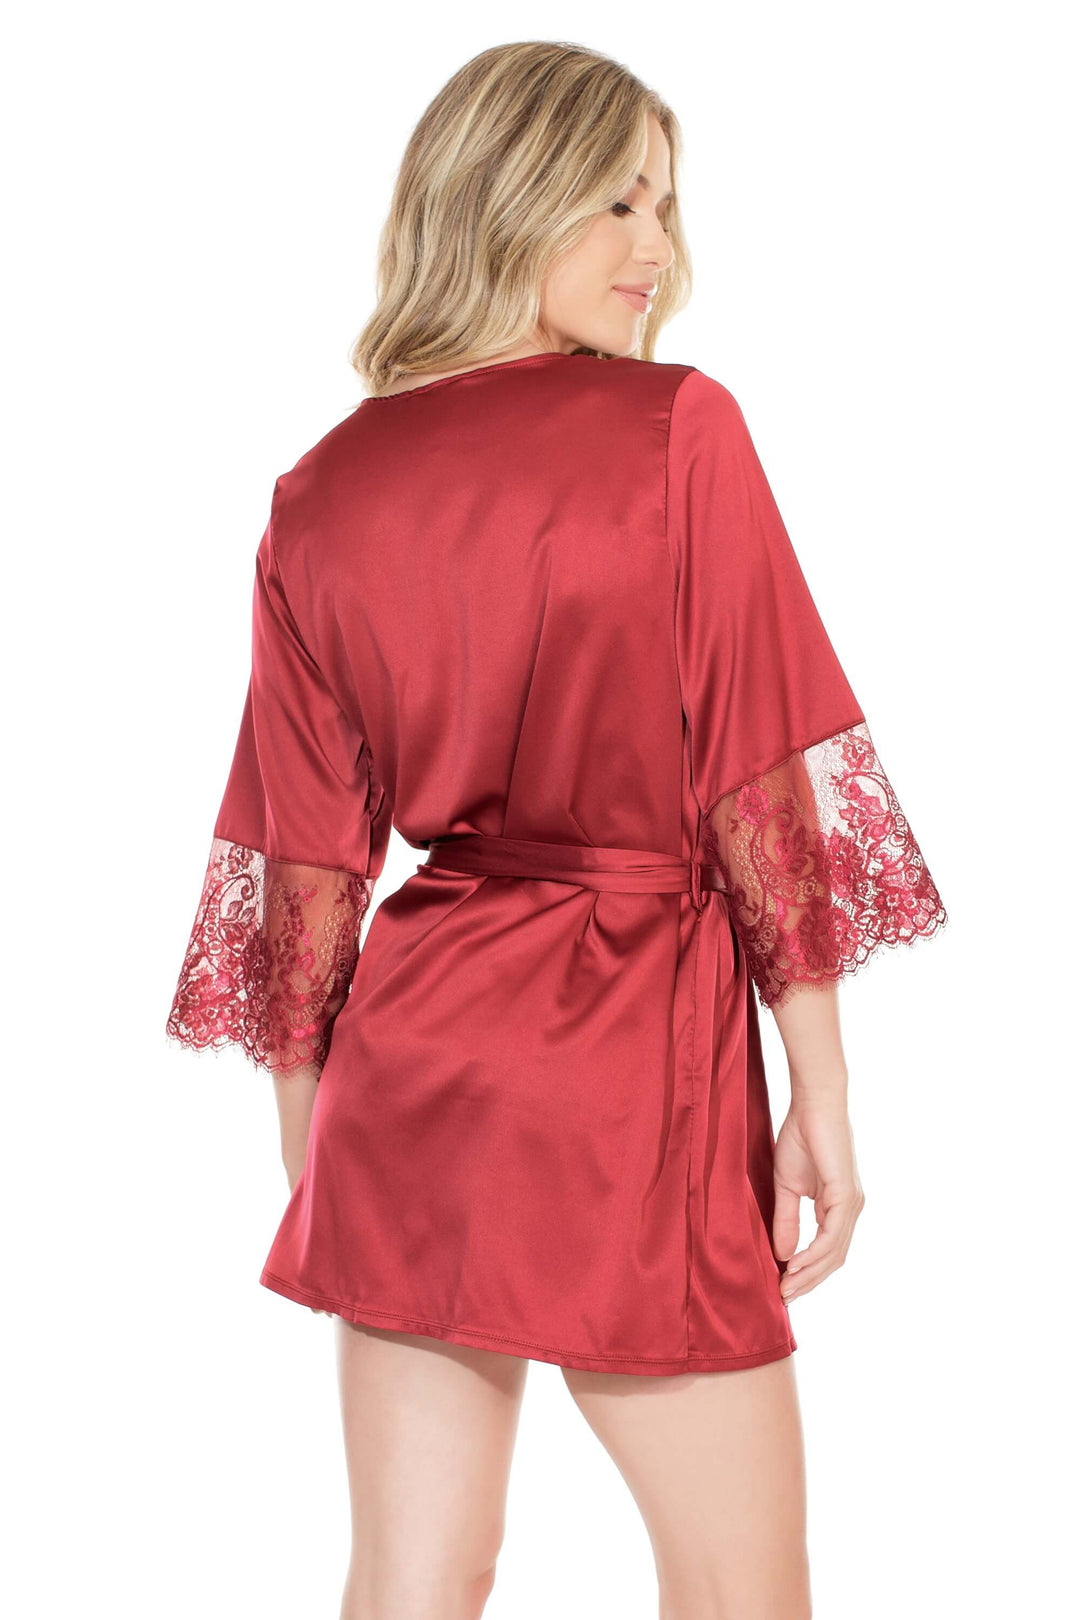 Coquette Merlot Stretch Satin Robe w/Eyelash Lace Sleeves